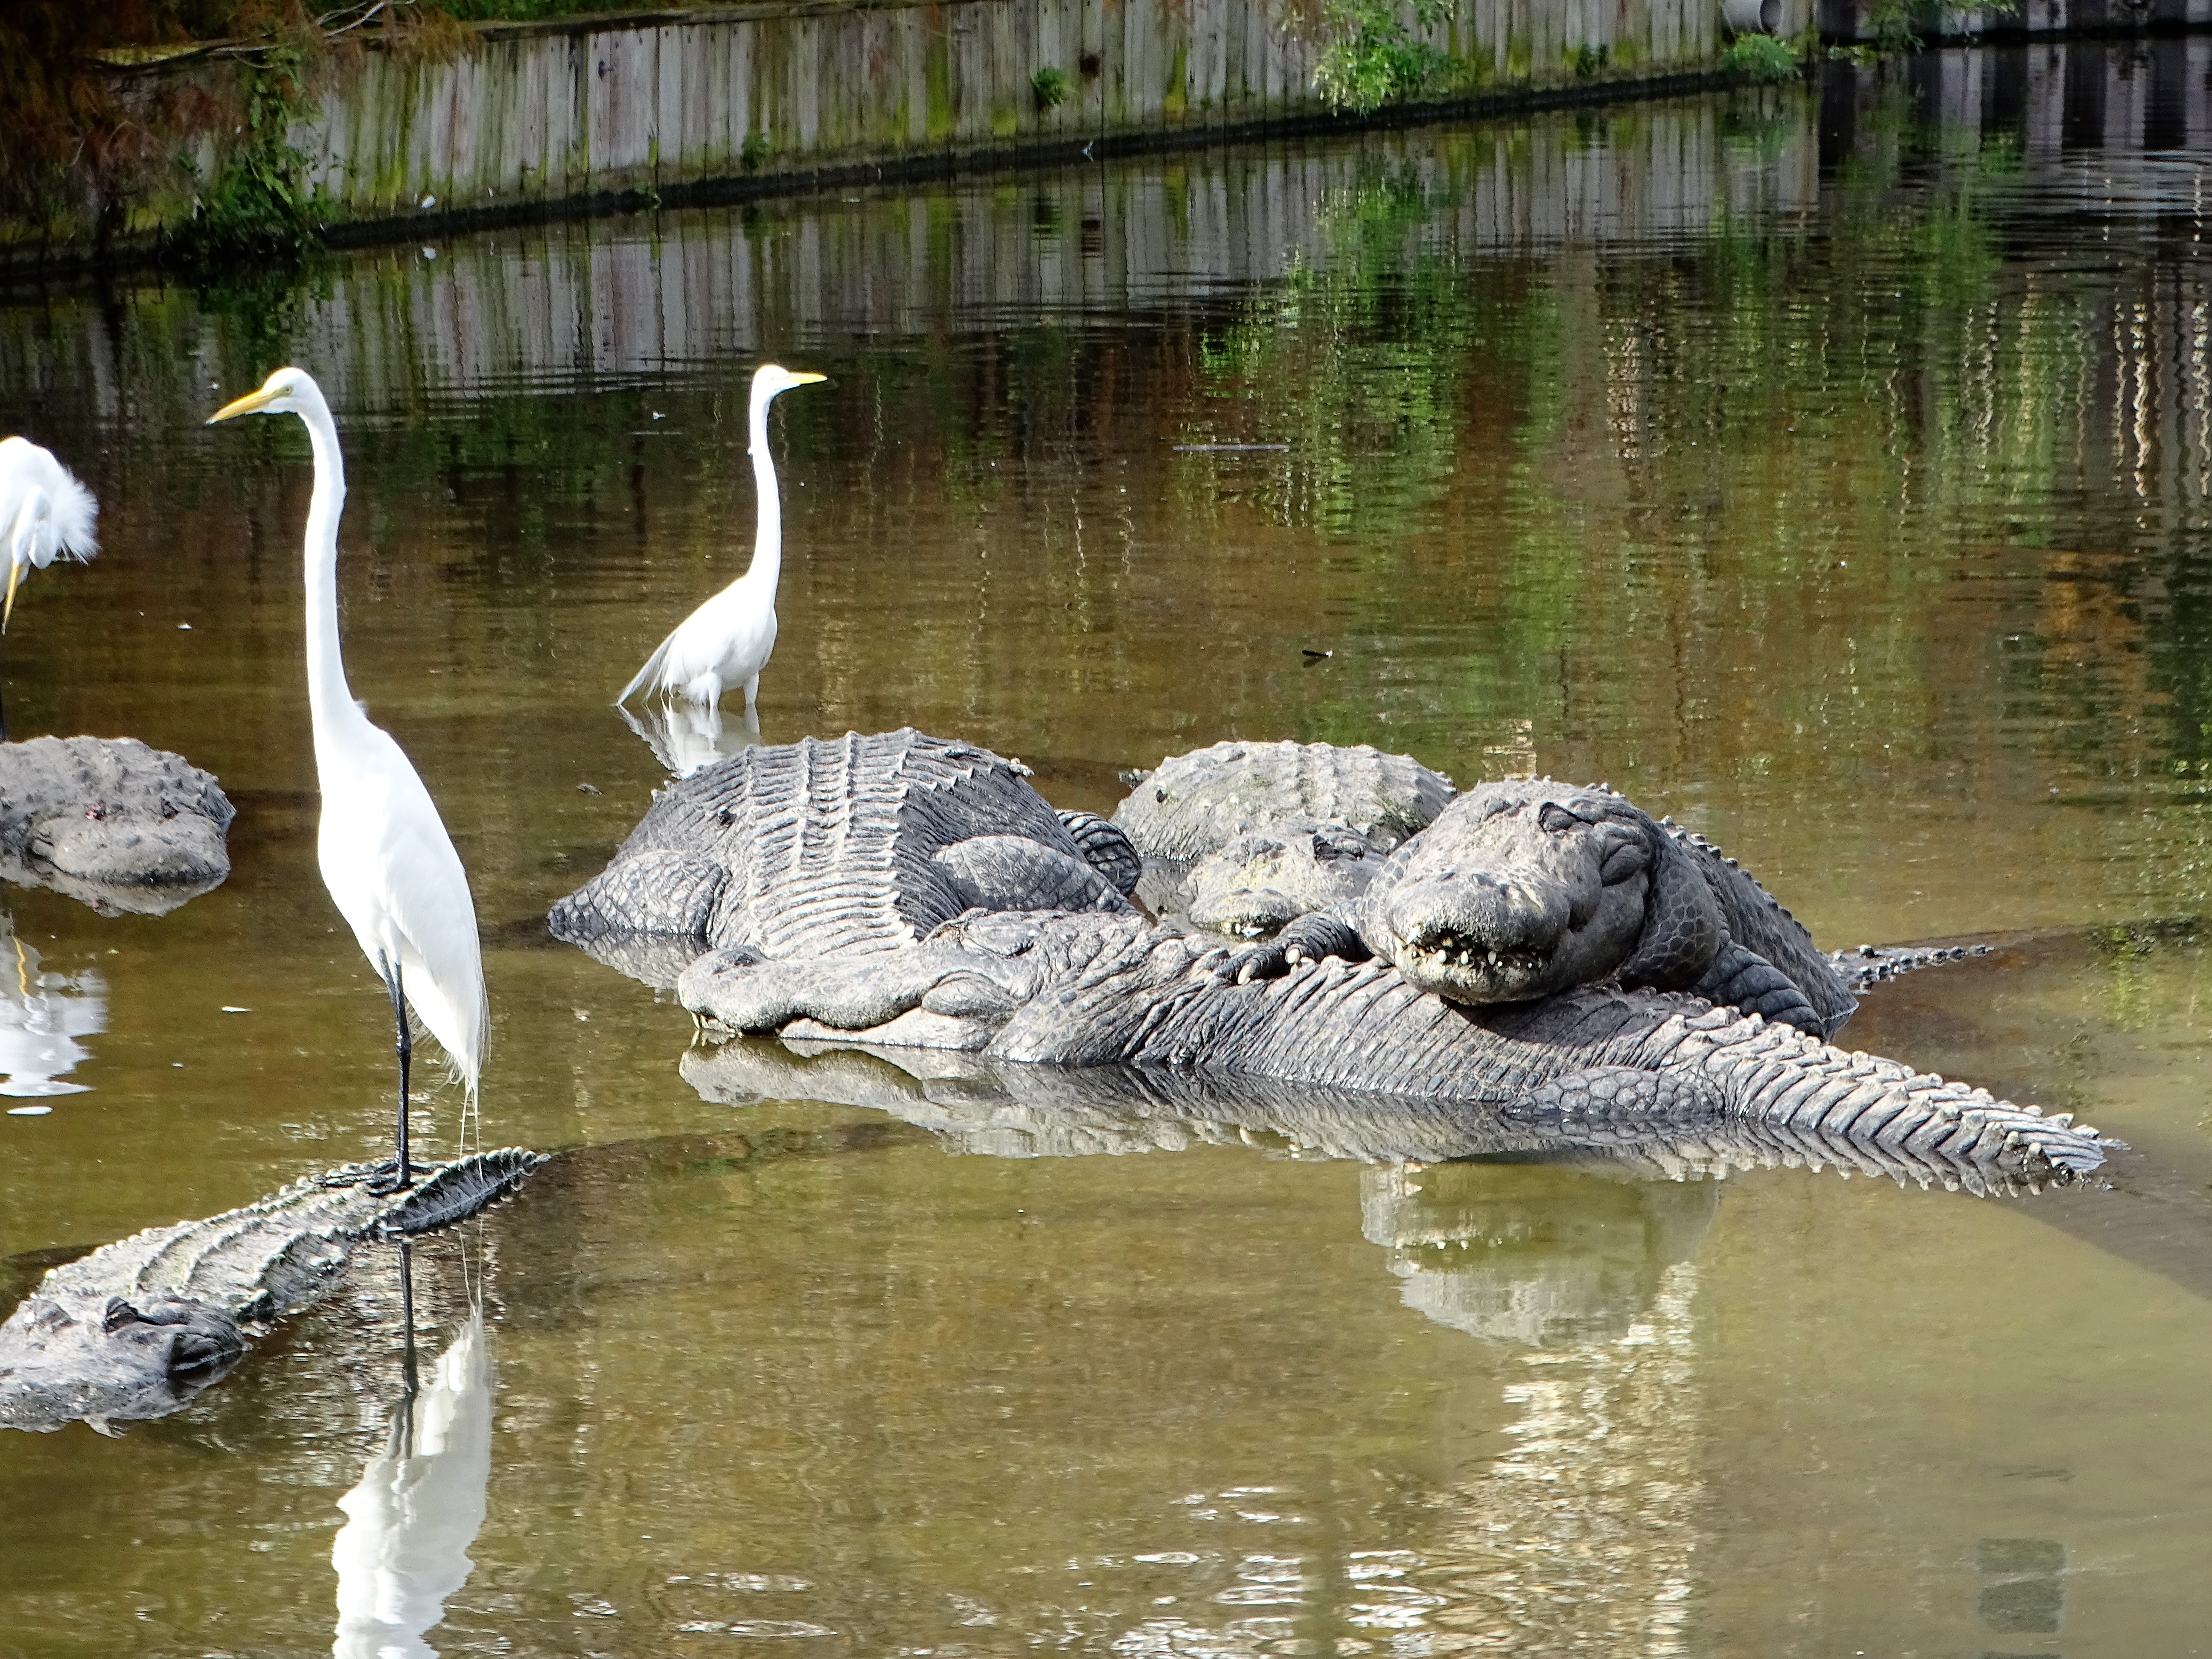 Gators in the pond at gatorland